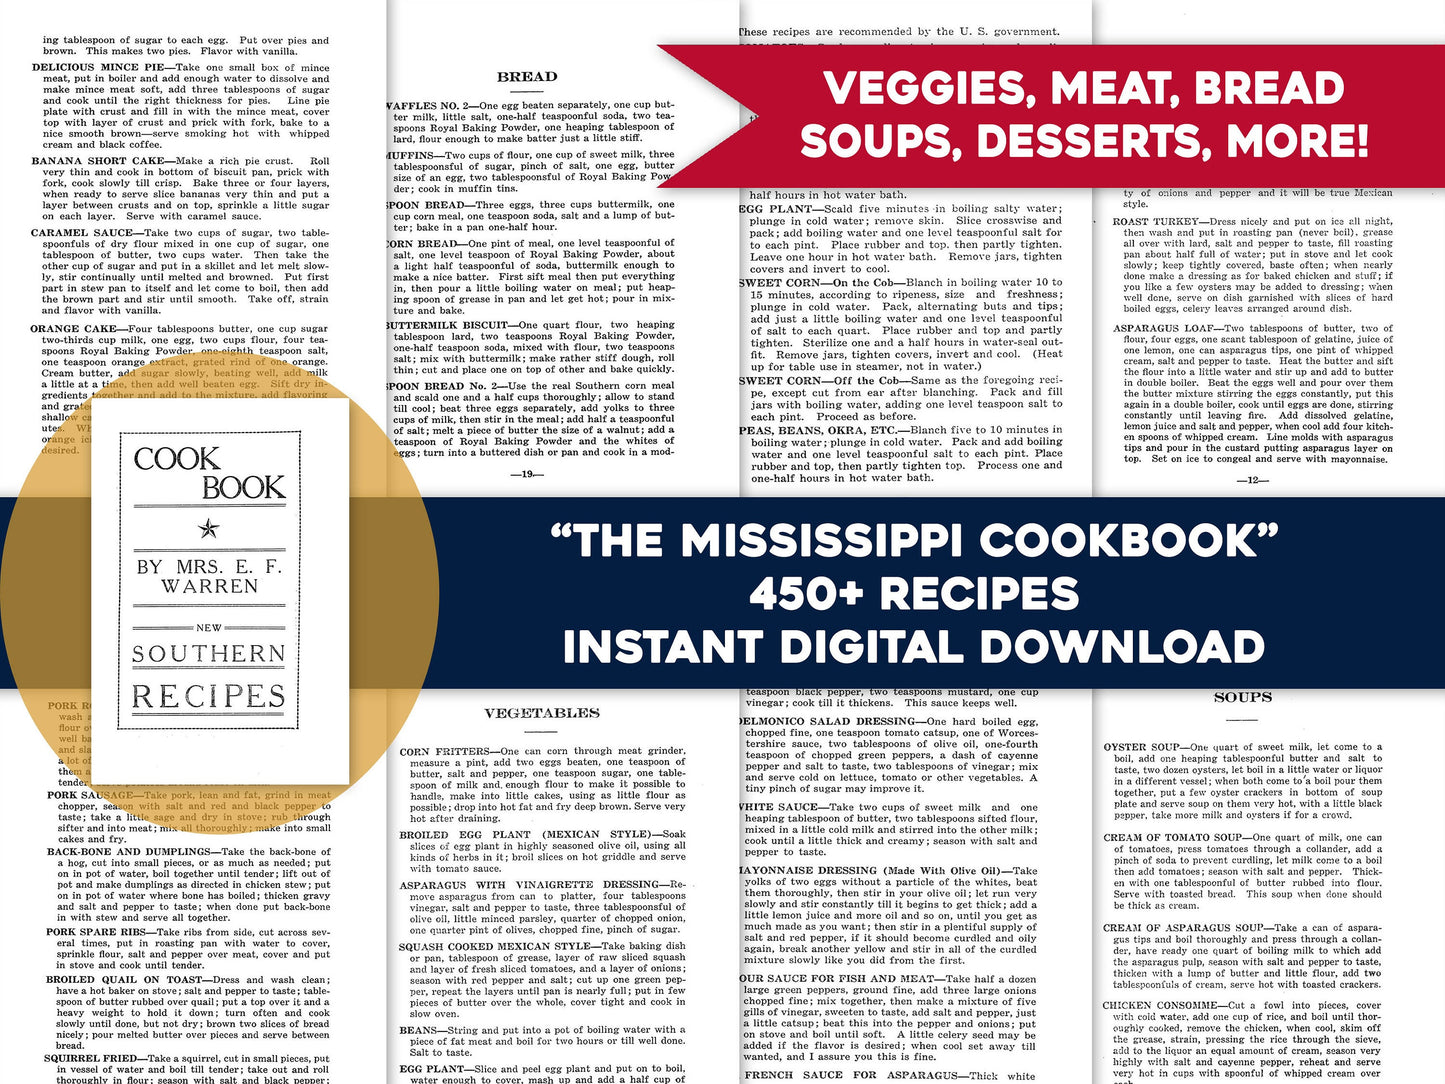 The Mississippi Cookbook [450+ Recipes]